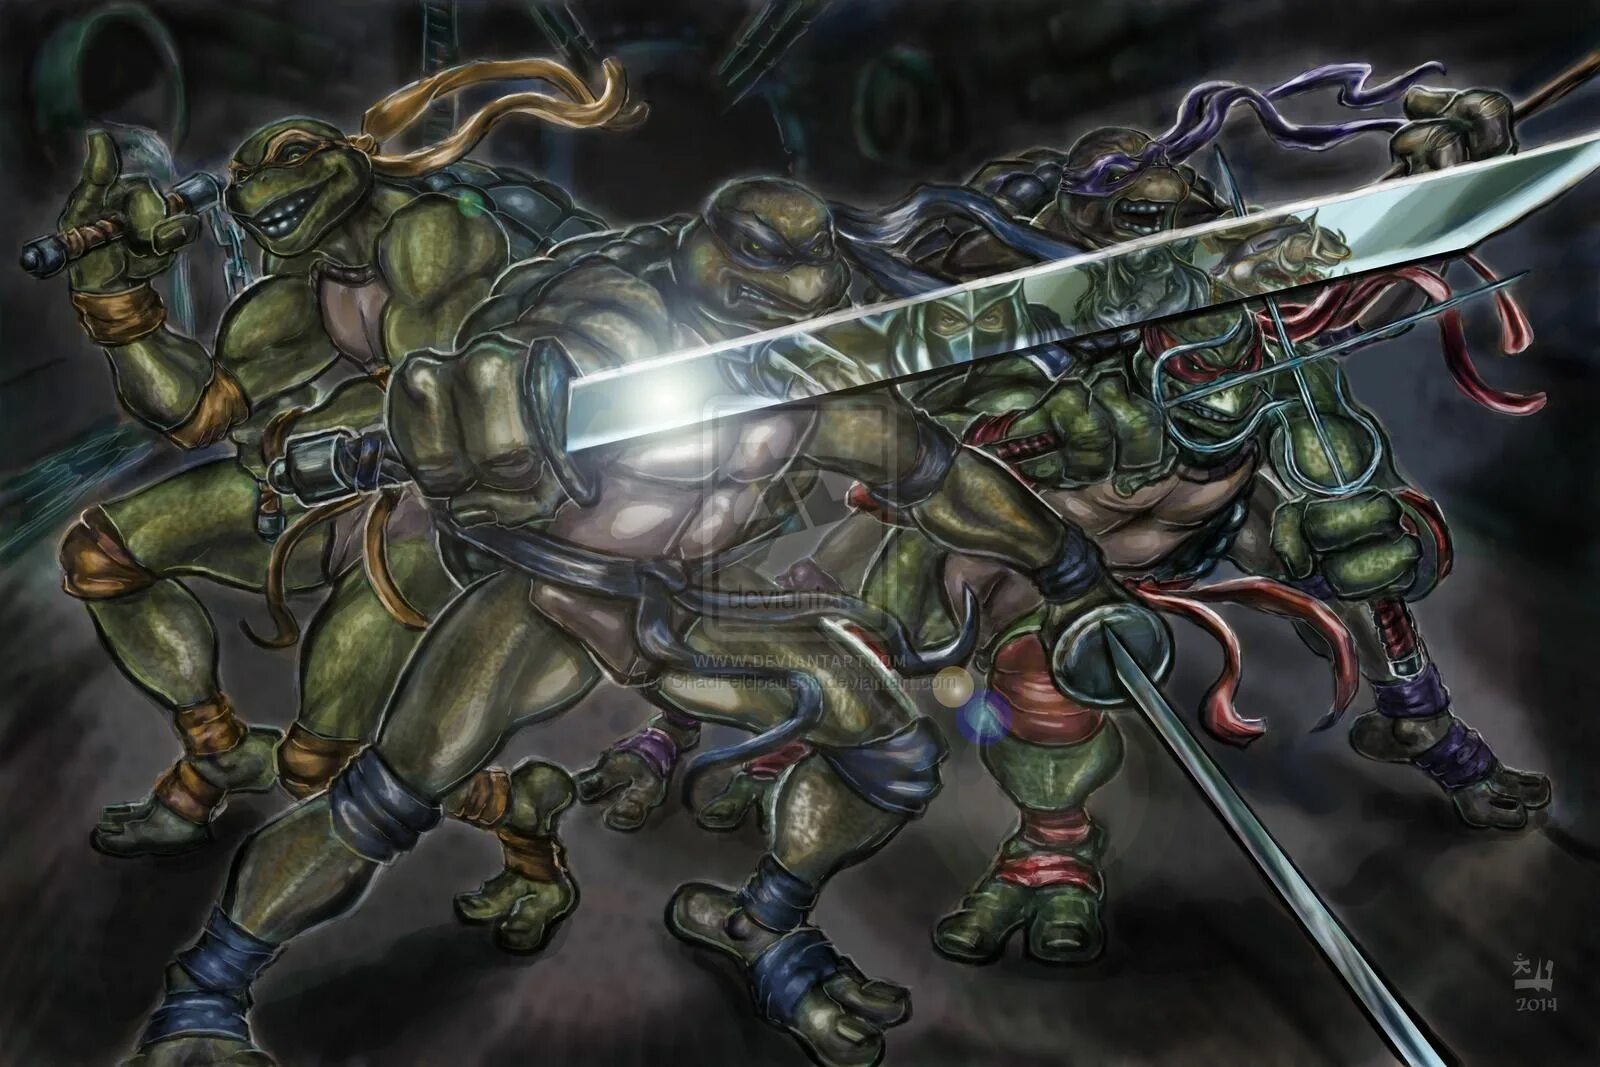 Teenage mutant ninja turtles splintered fate. Черепашки ниндзя Shredder Revenge. Шредер TMNT. Крейн Черепашки ниндзя. Ninja Turtles Shredder Revenge.